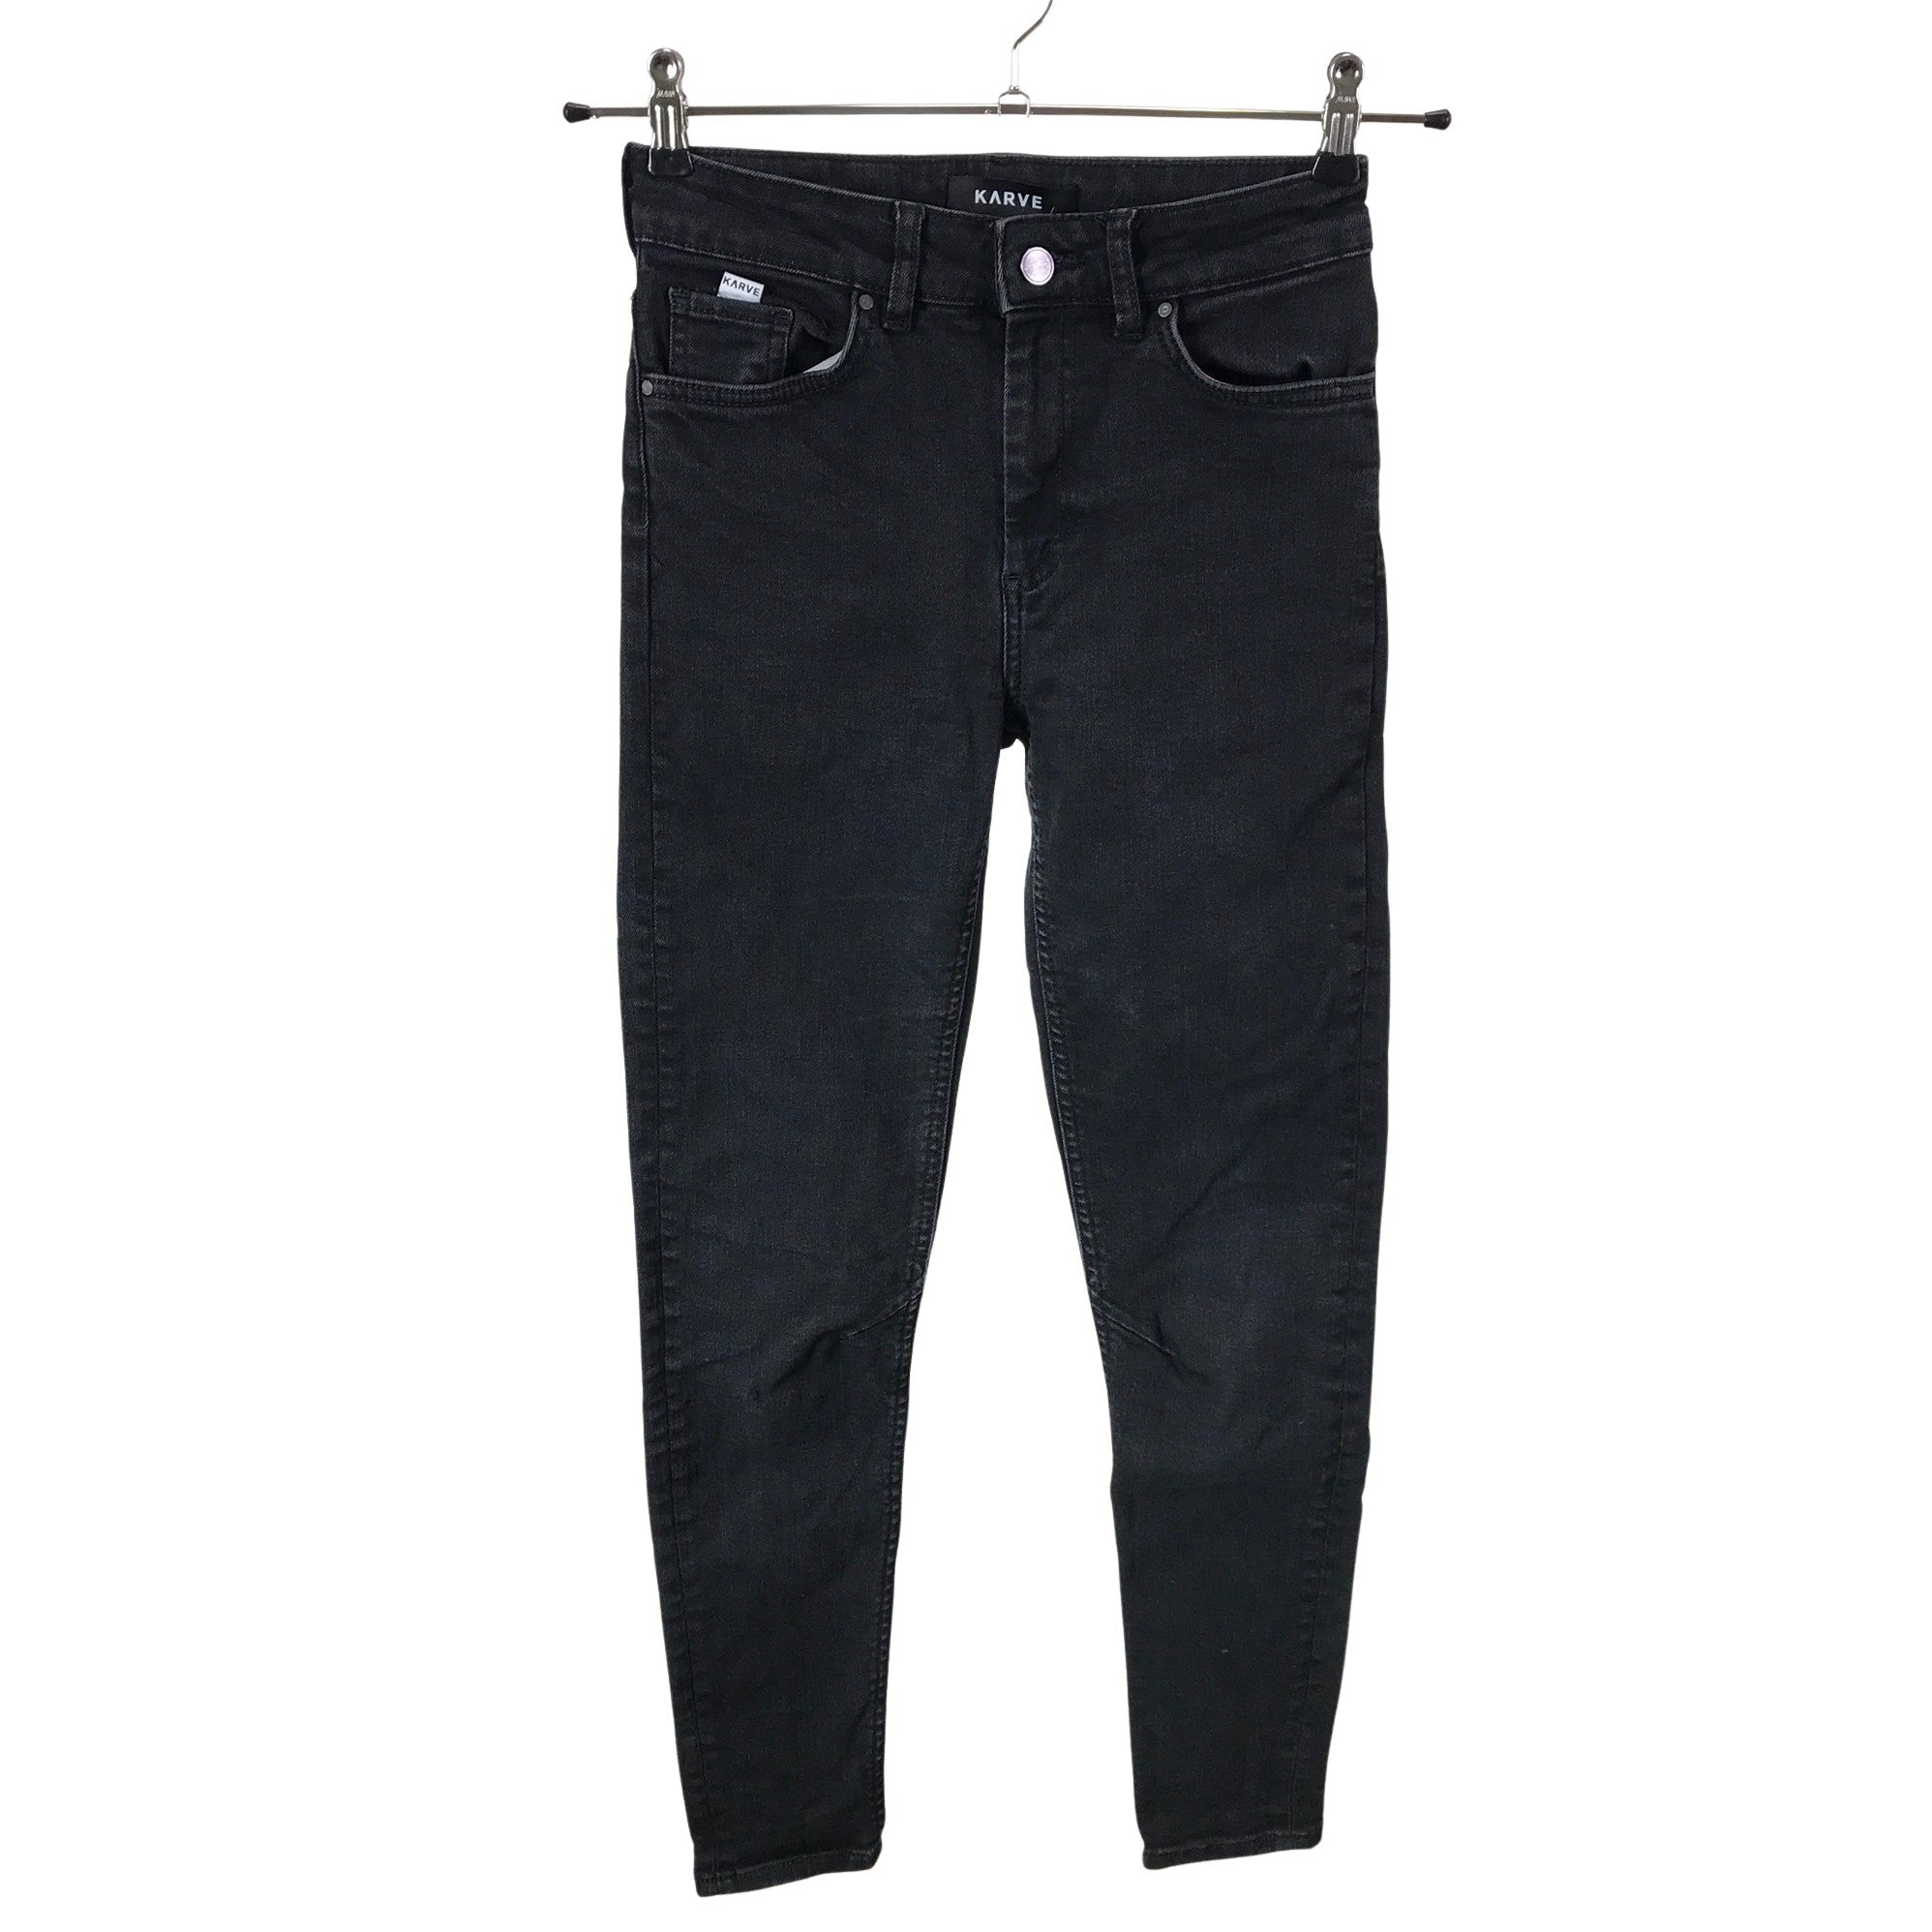 Sandro Paris Women's Jeans Size 36 Black Rinse Skinny Mid Rise | eBay